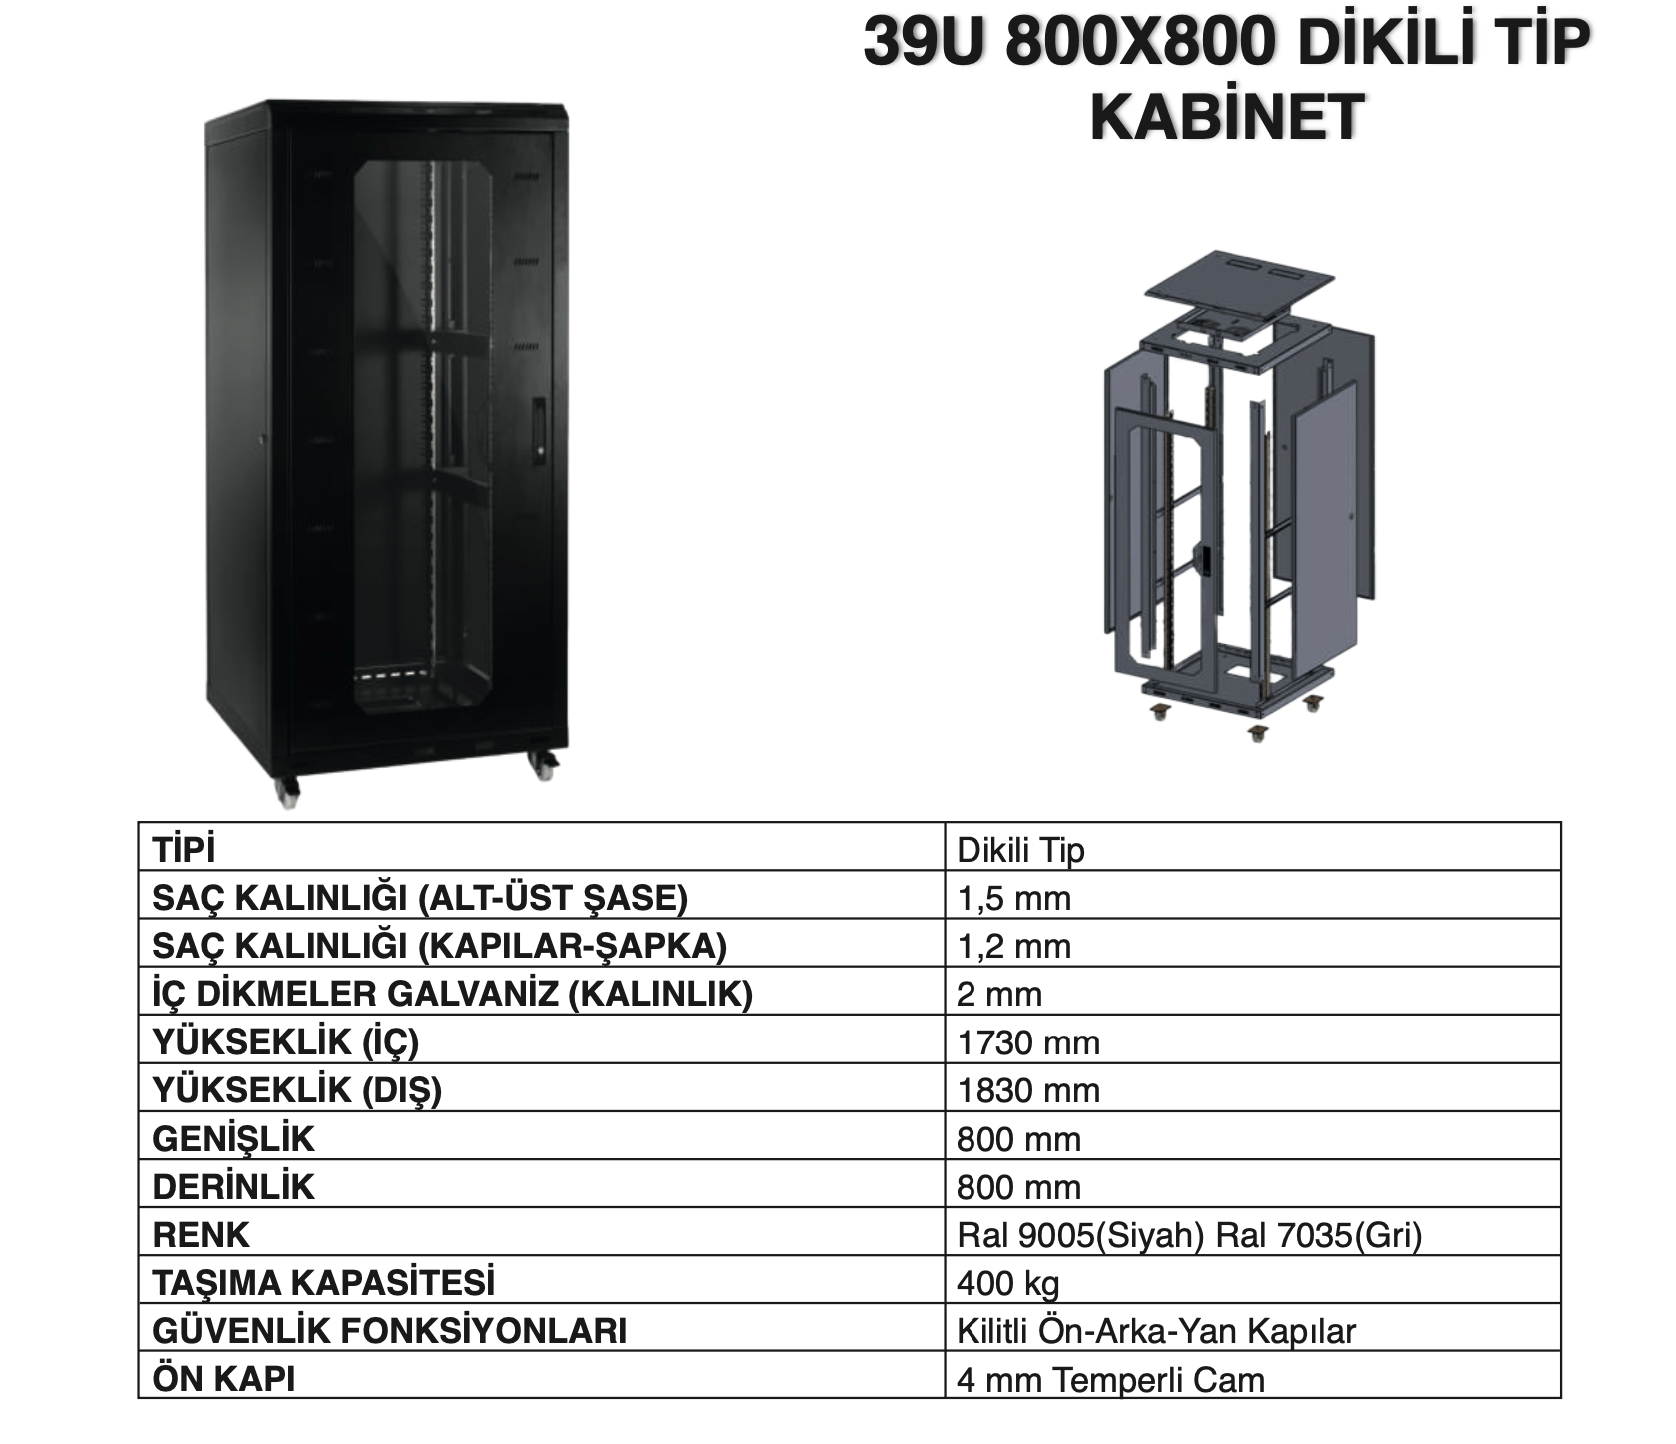 39U 800x800 kabinet